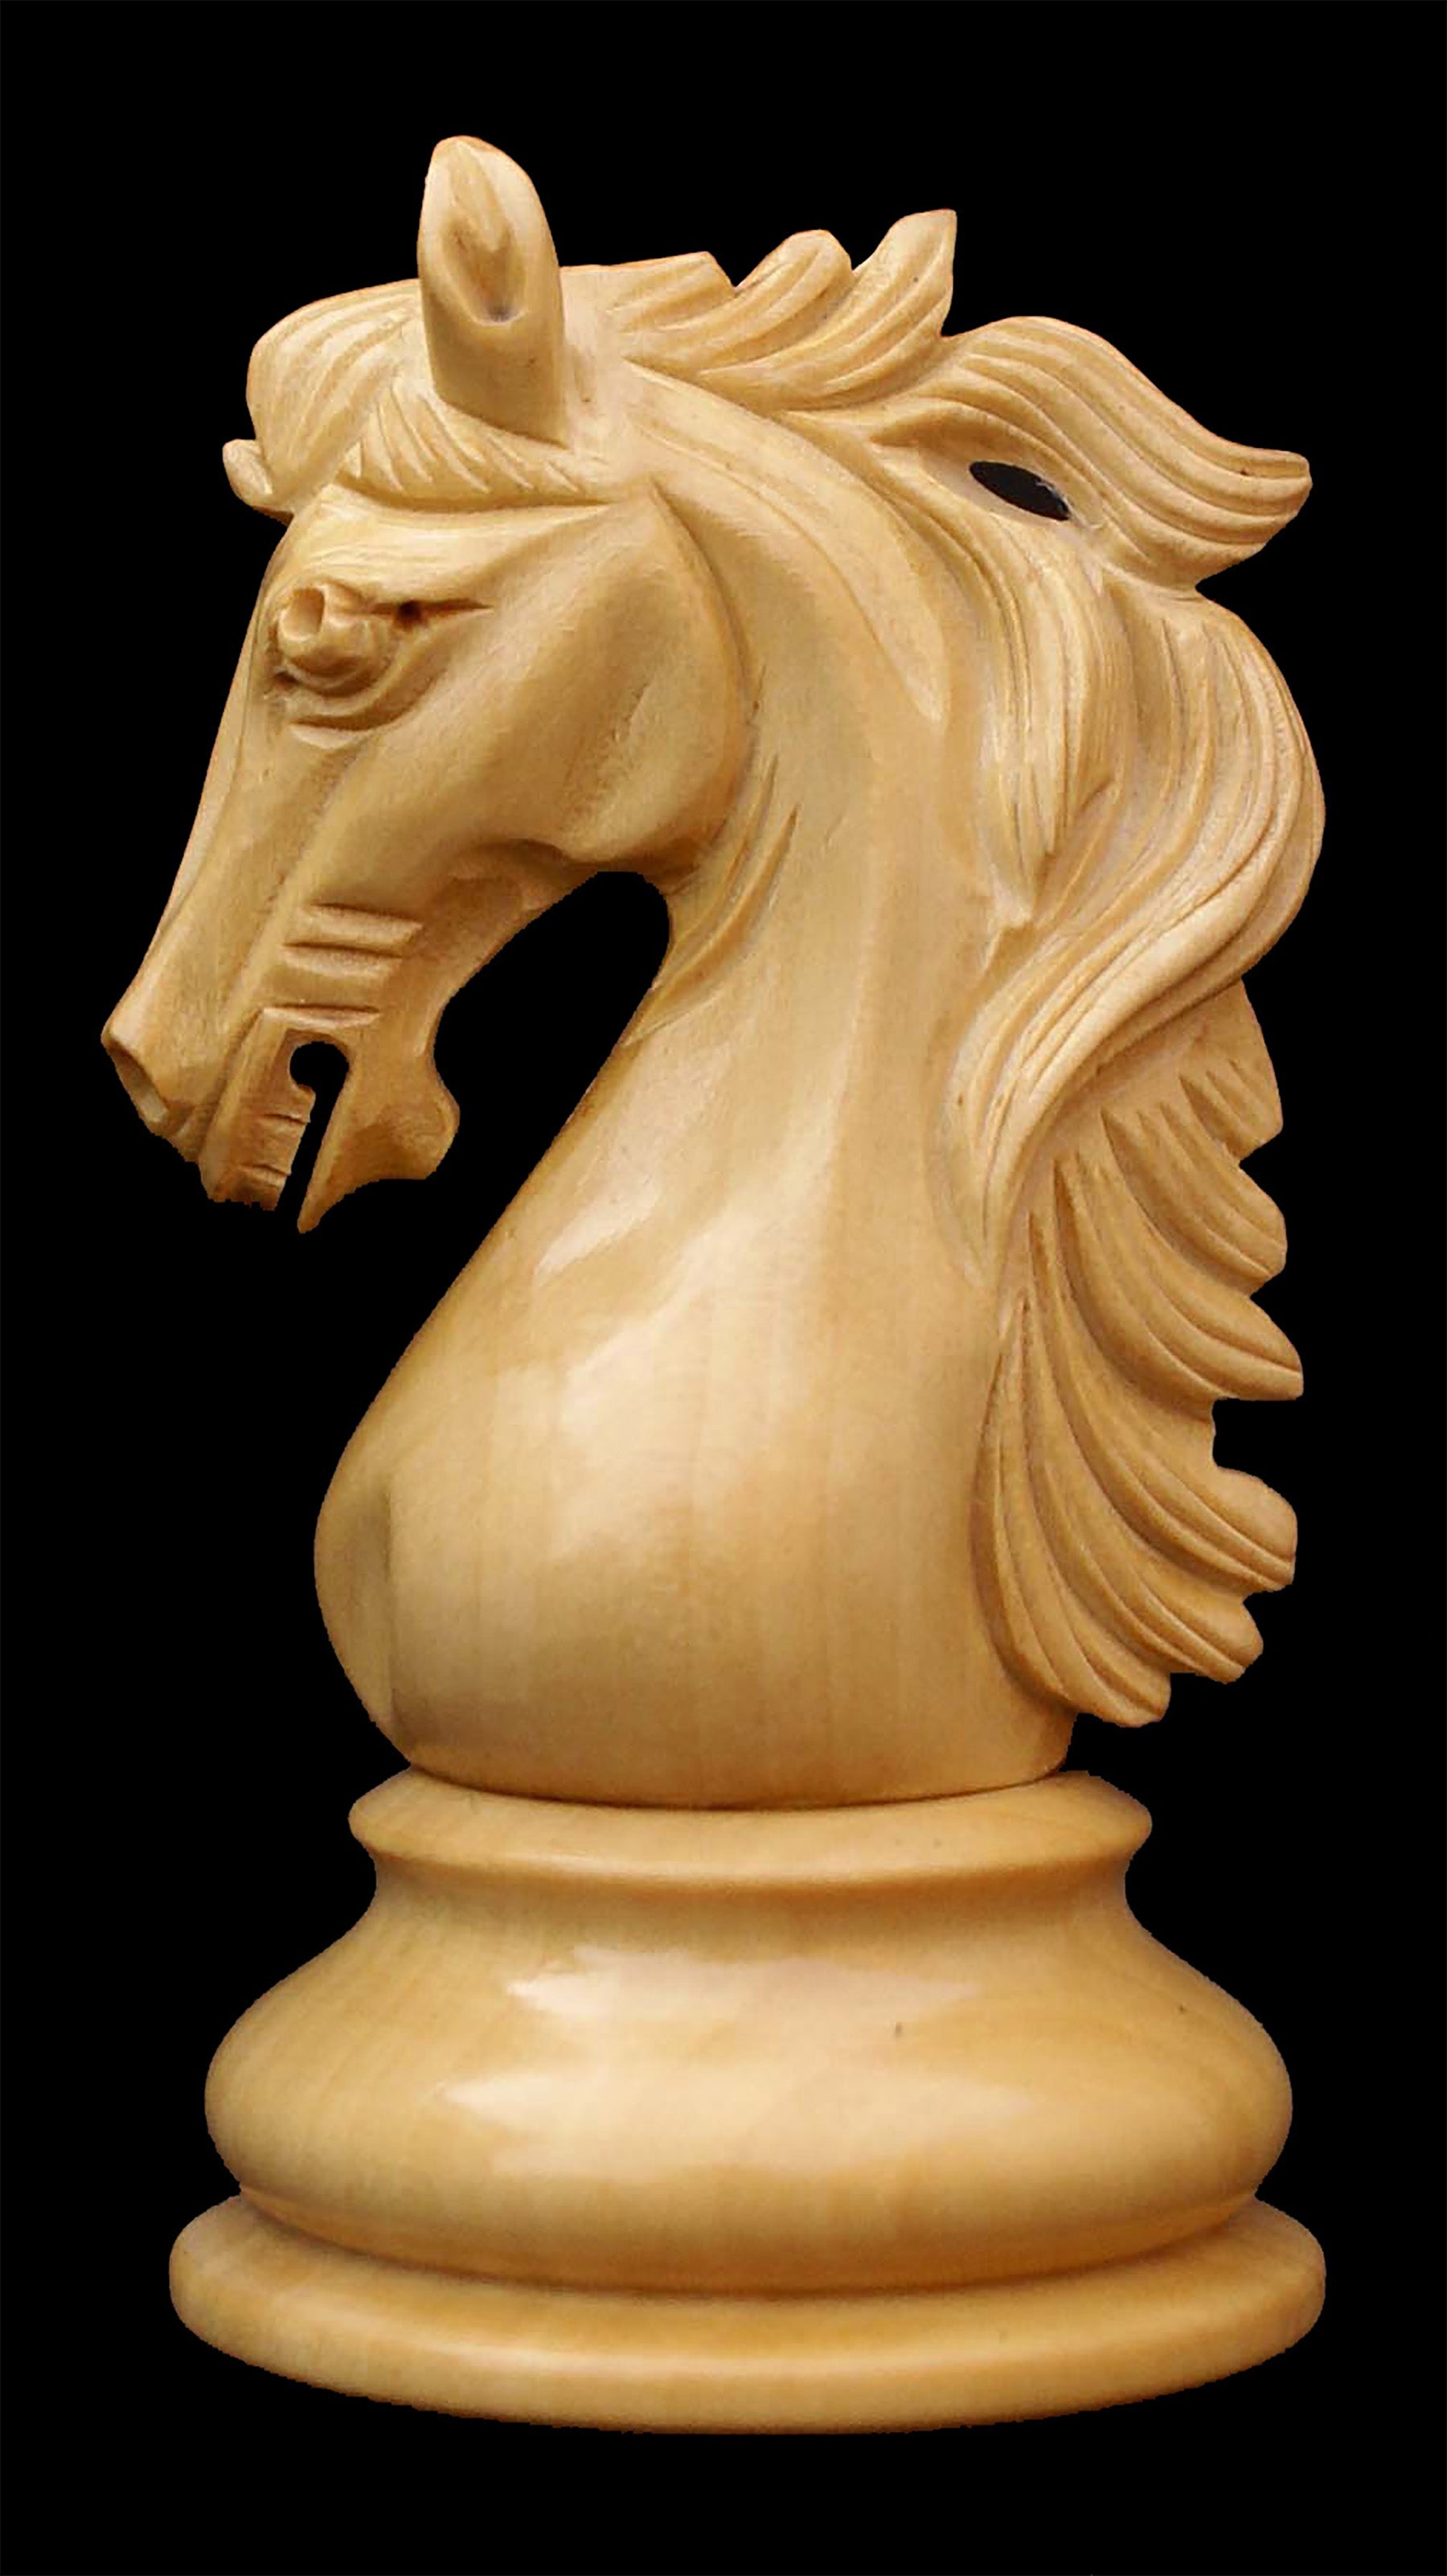 Heritage Series 4.4" Premium Staunton Ebony wood  Chess Set